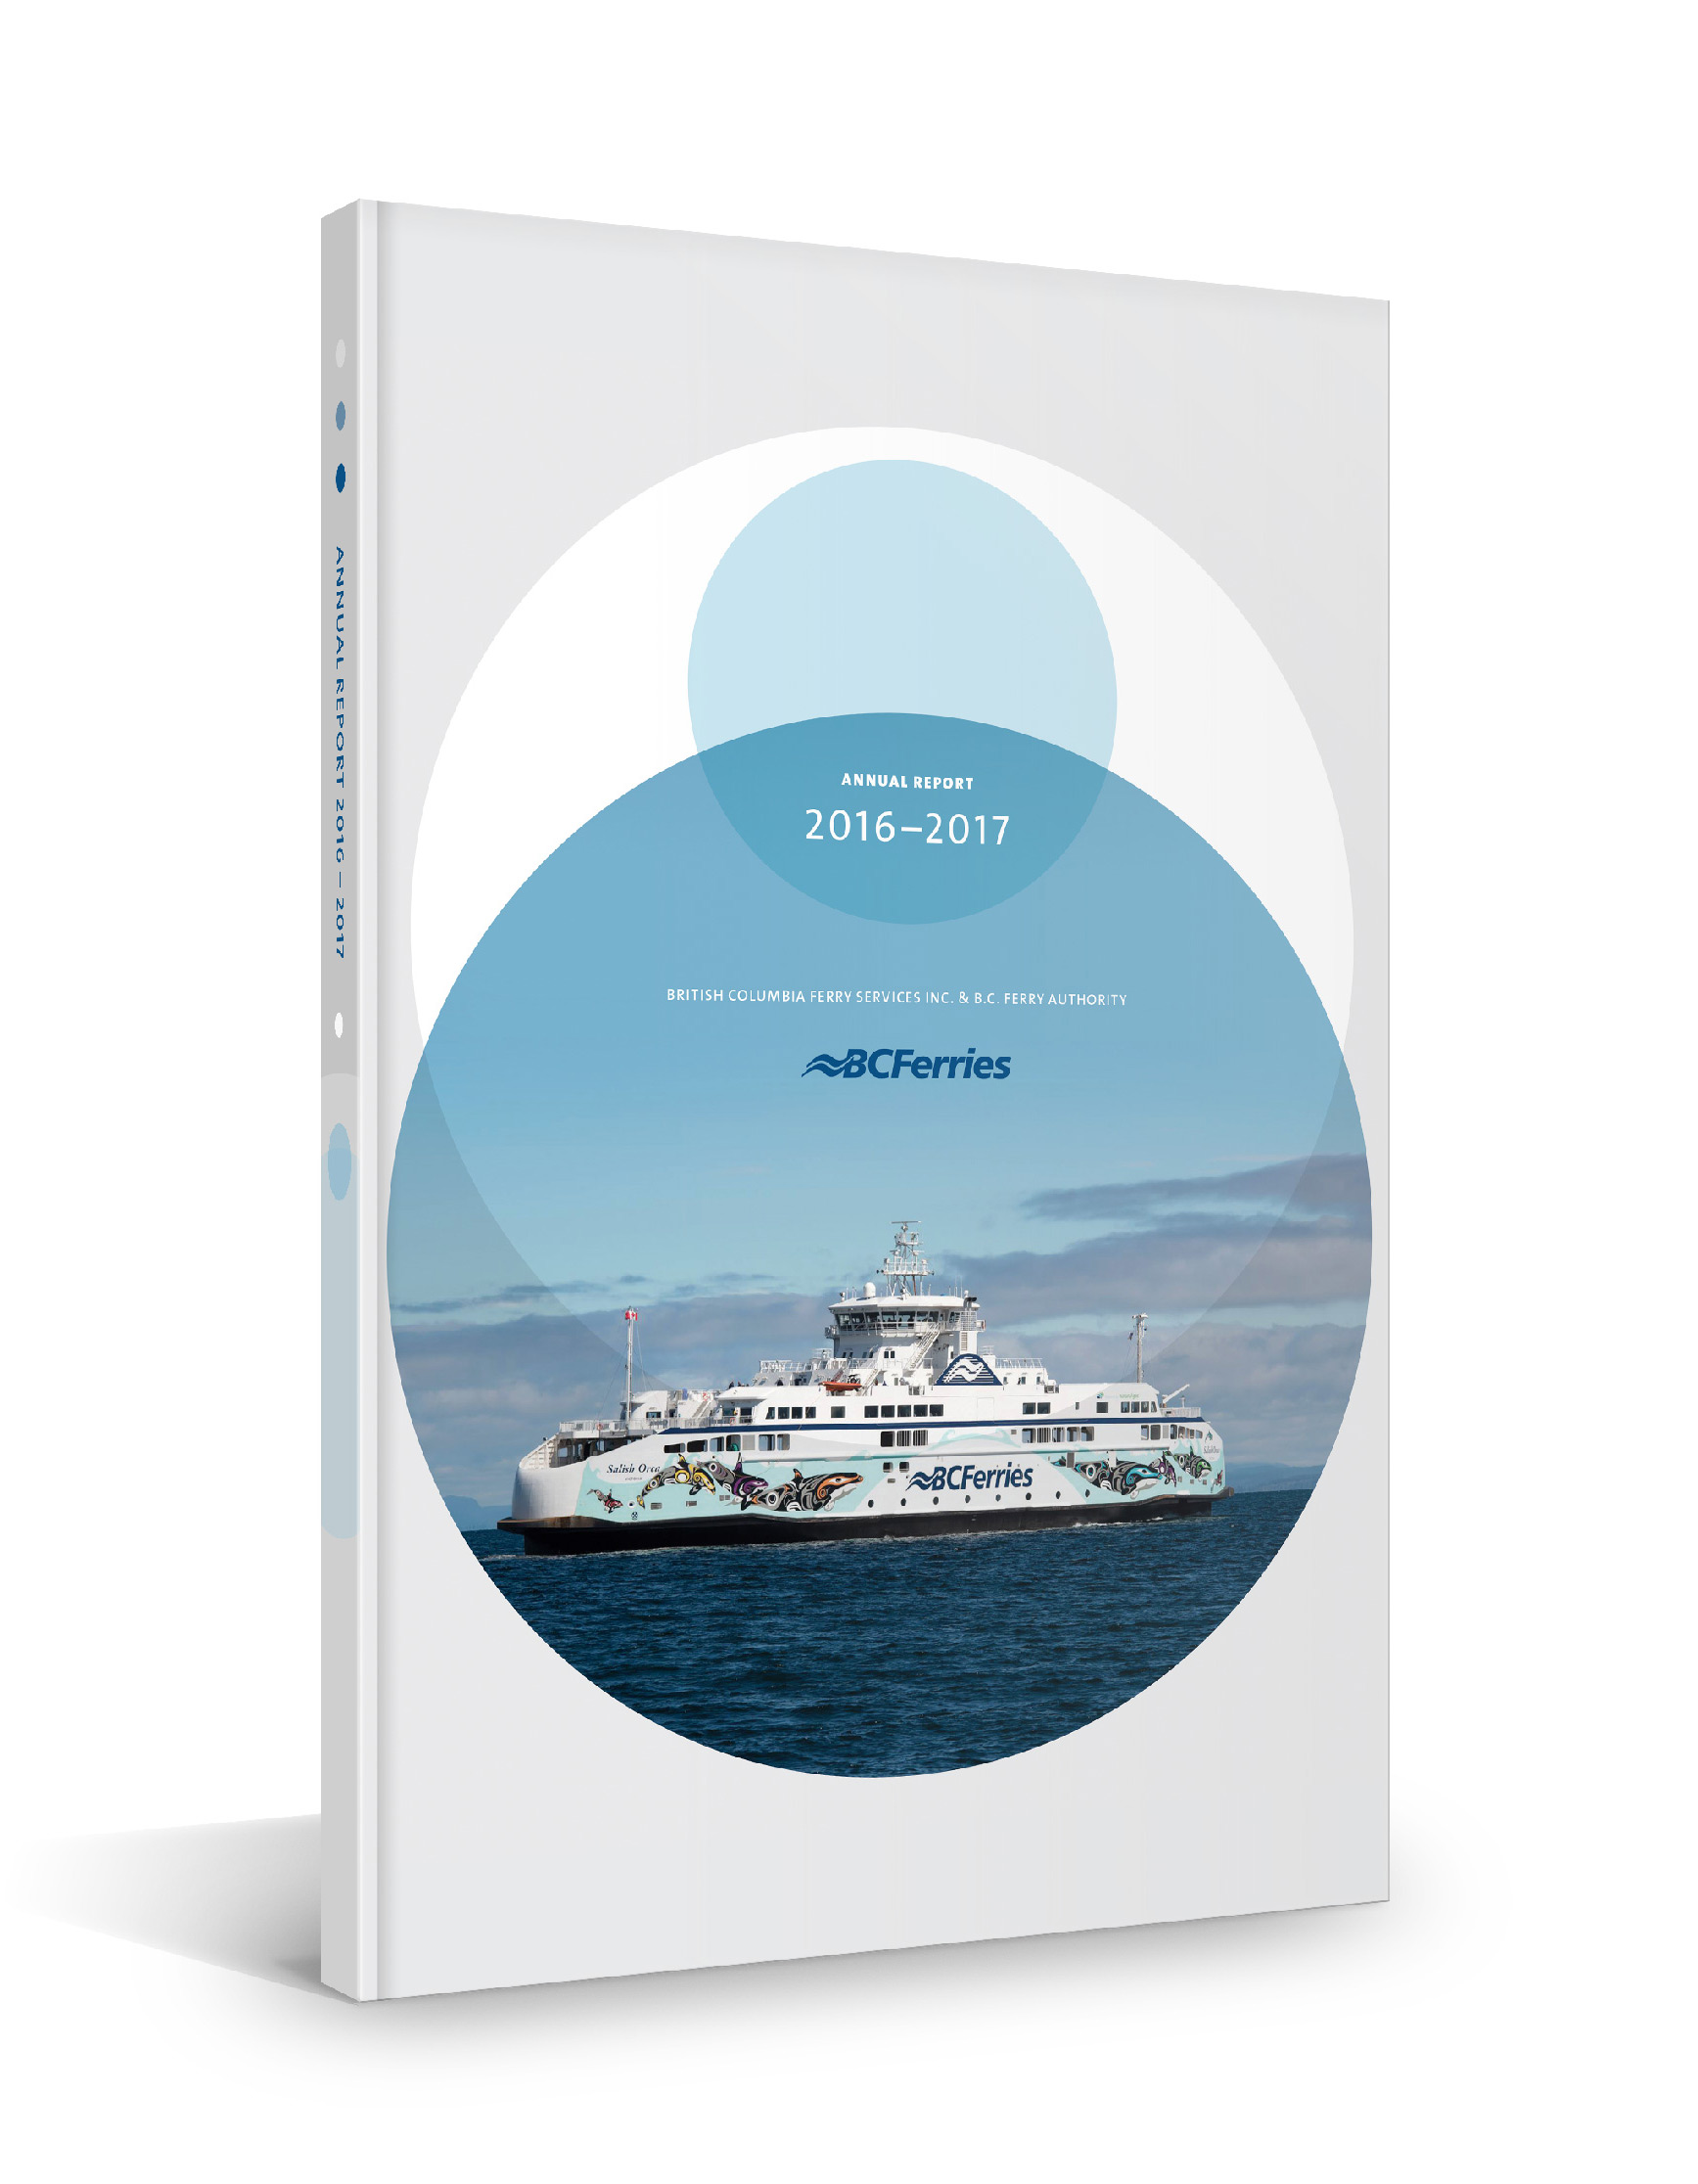 Domanatrixsex - Coromoto Diaz â€“ BC Ferries Annual Report